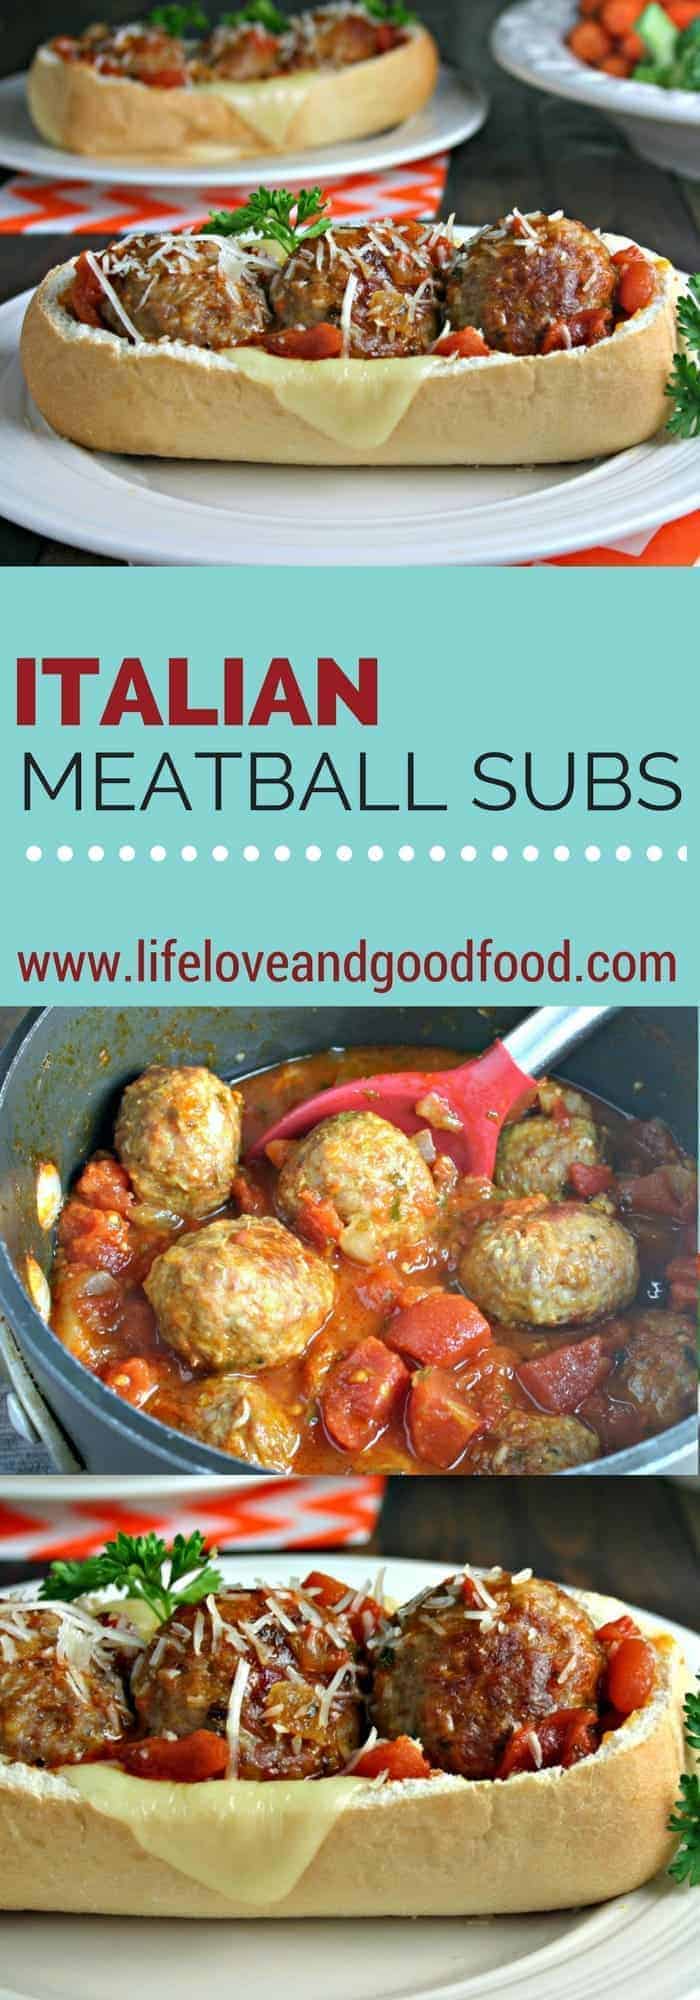 Italian Meatball Subs | Life, Love, and Good Food #Carando #sponsored